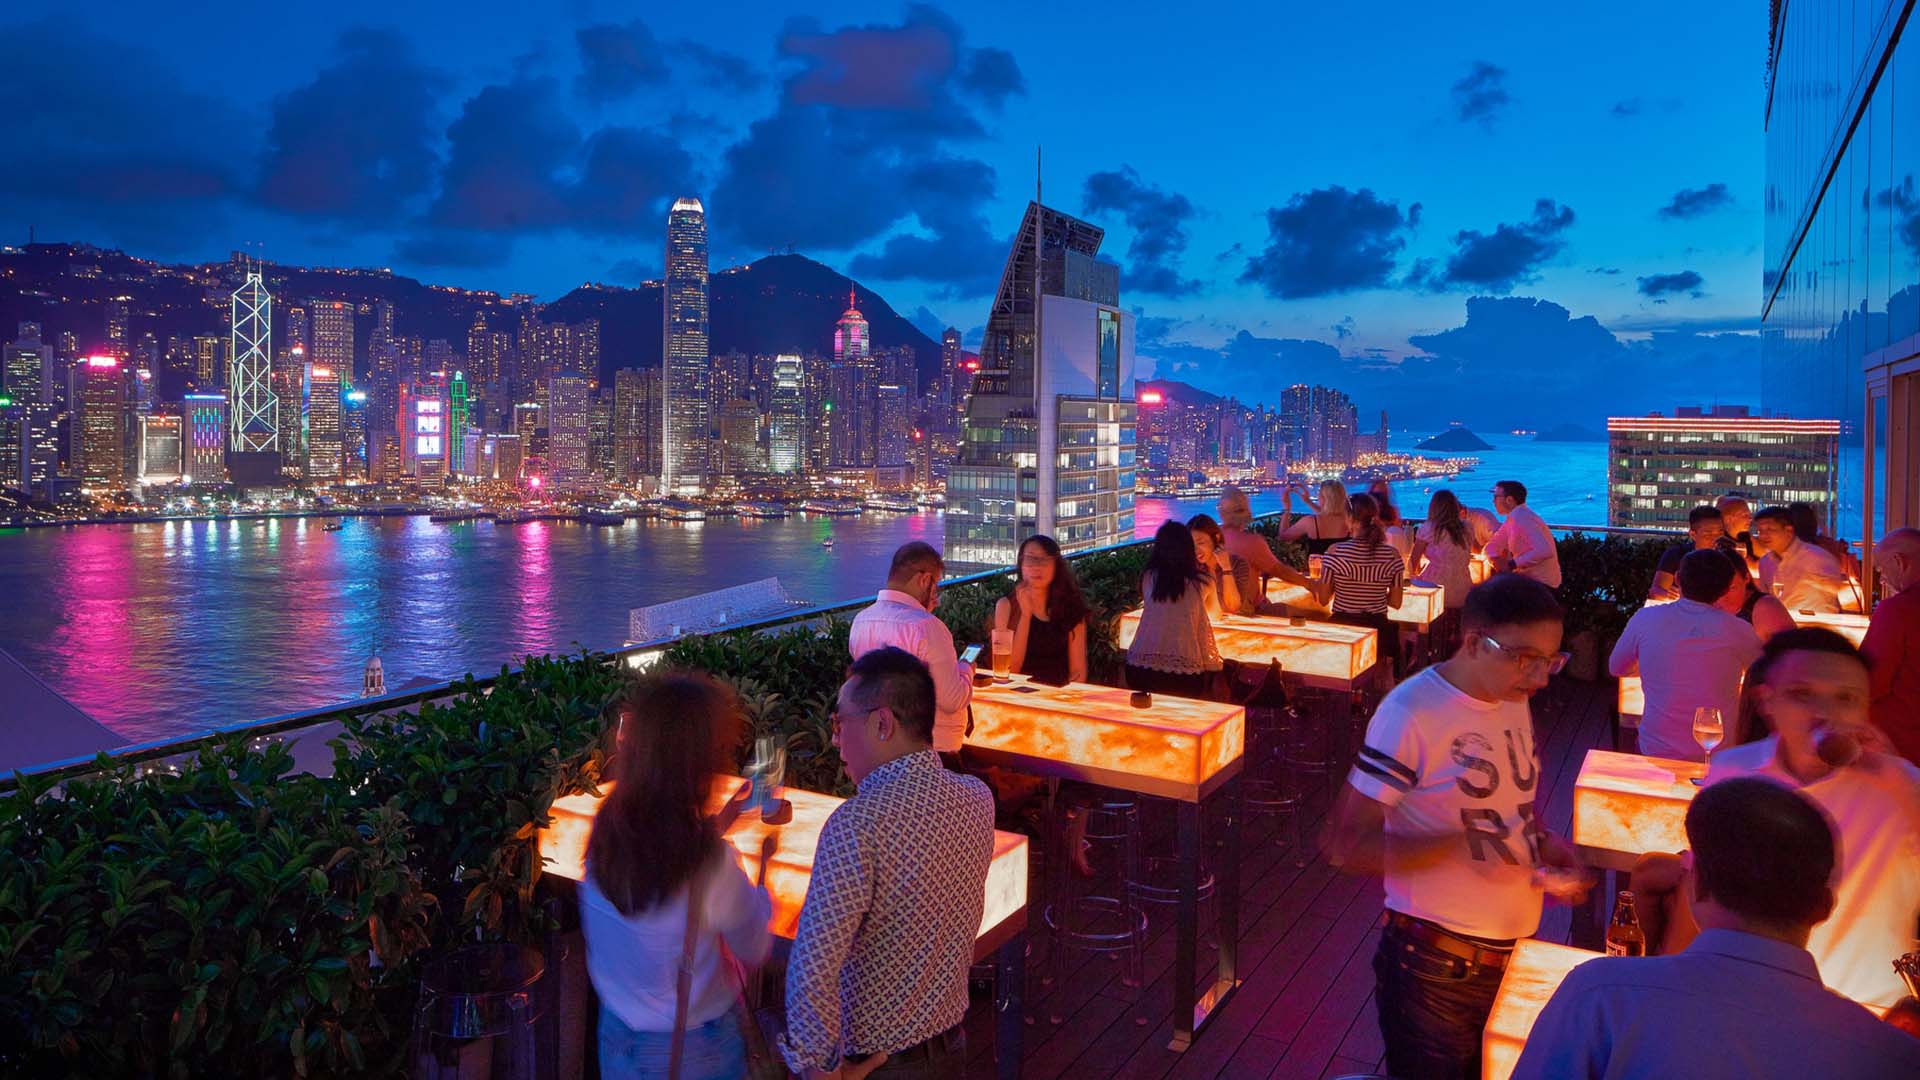 https://www.discoverhongkong.com/content/dam/dhk/intl/explore/nightlife/rooftop-bars-in-hong-kong/rooftop-bars-in-hong-kong-1920x1080.jpg